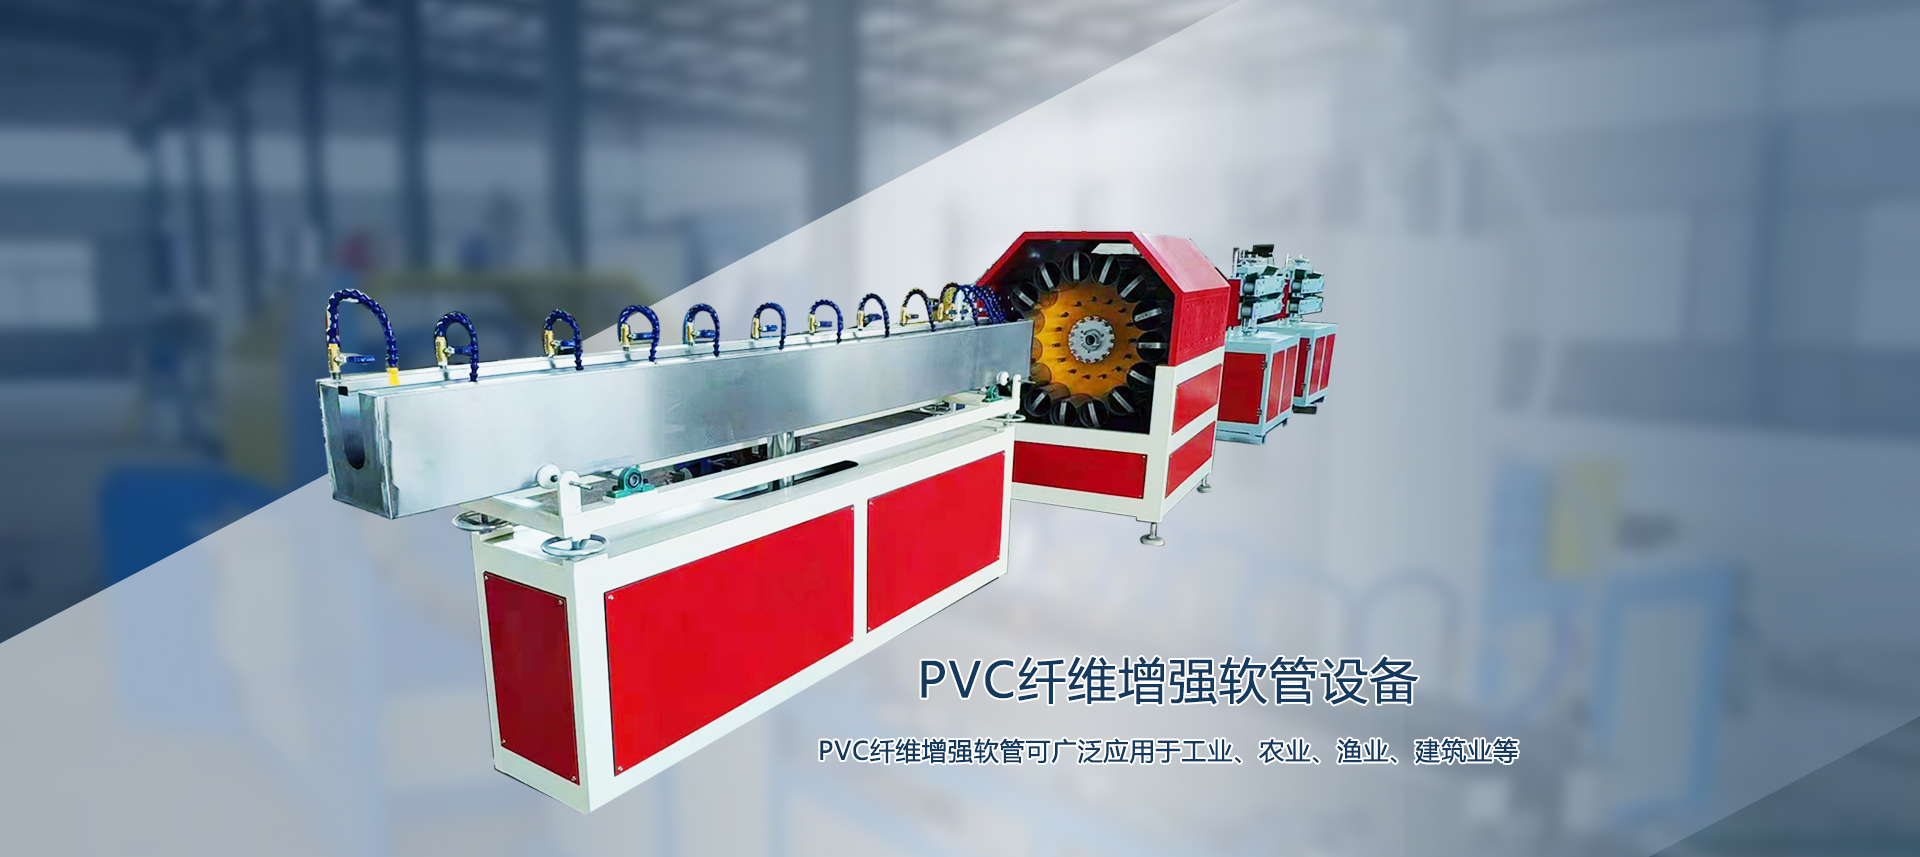 pvc軟管設備